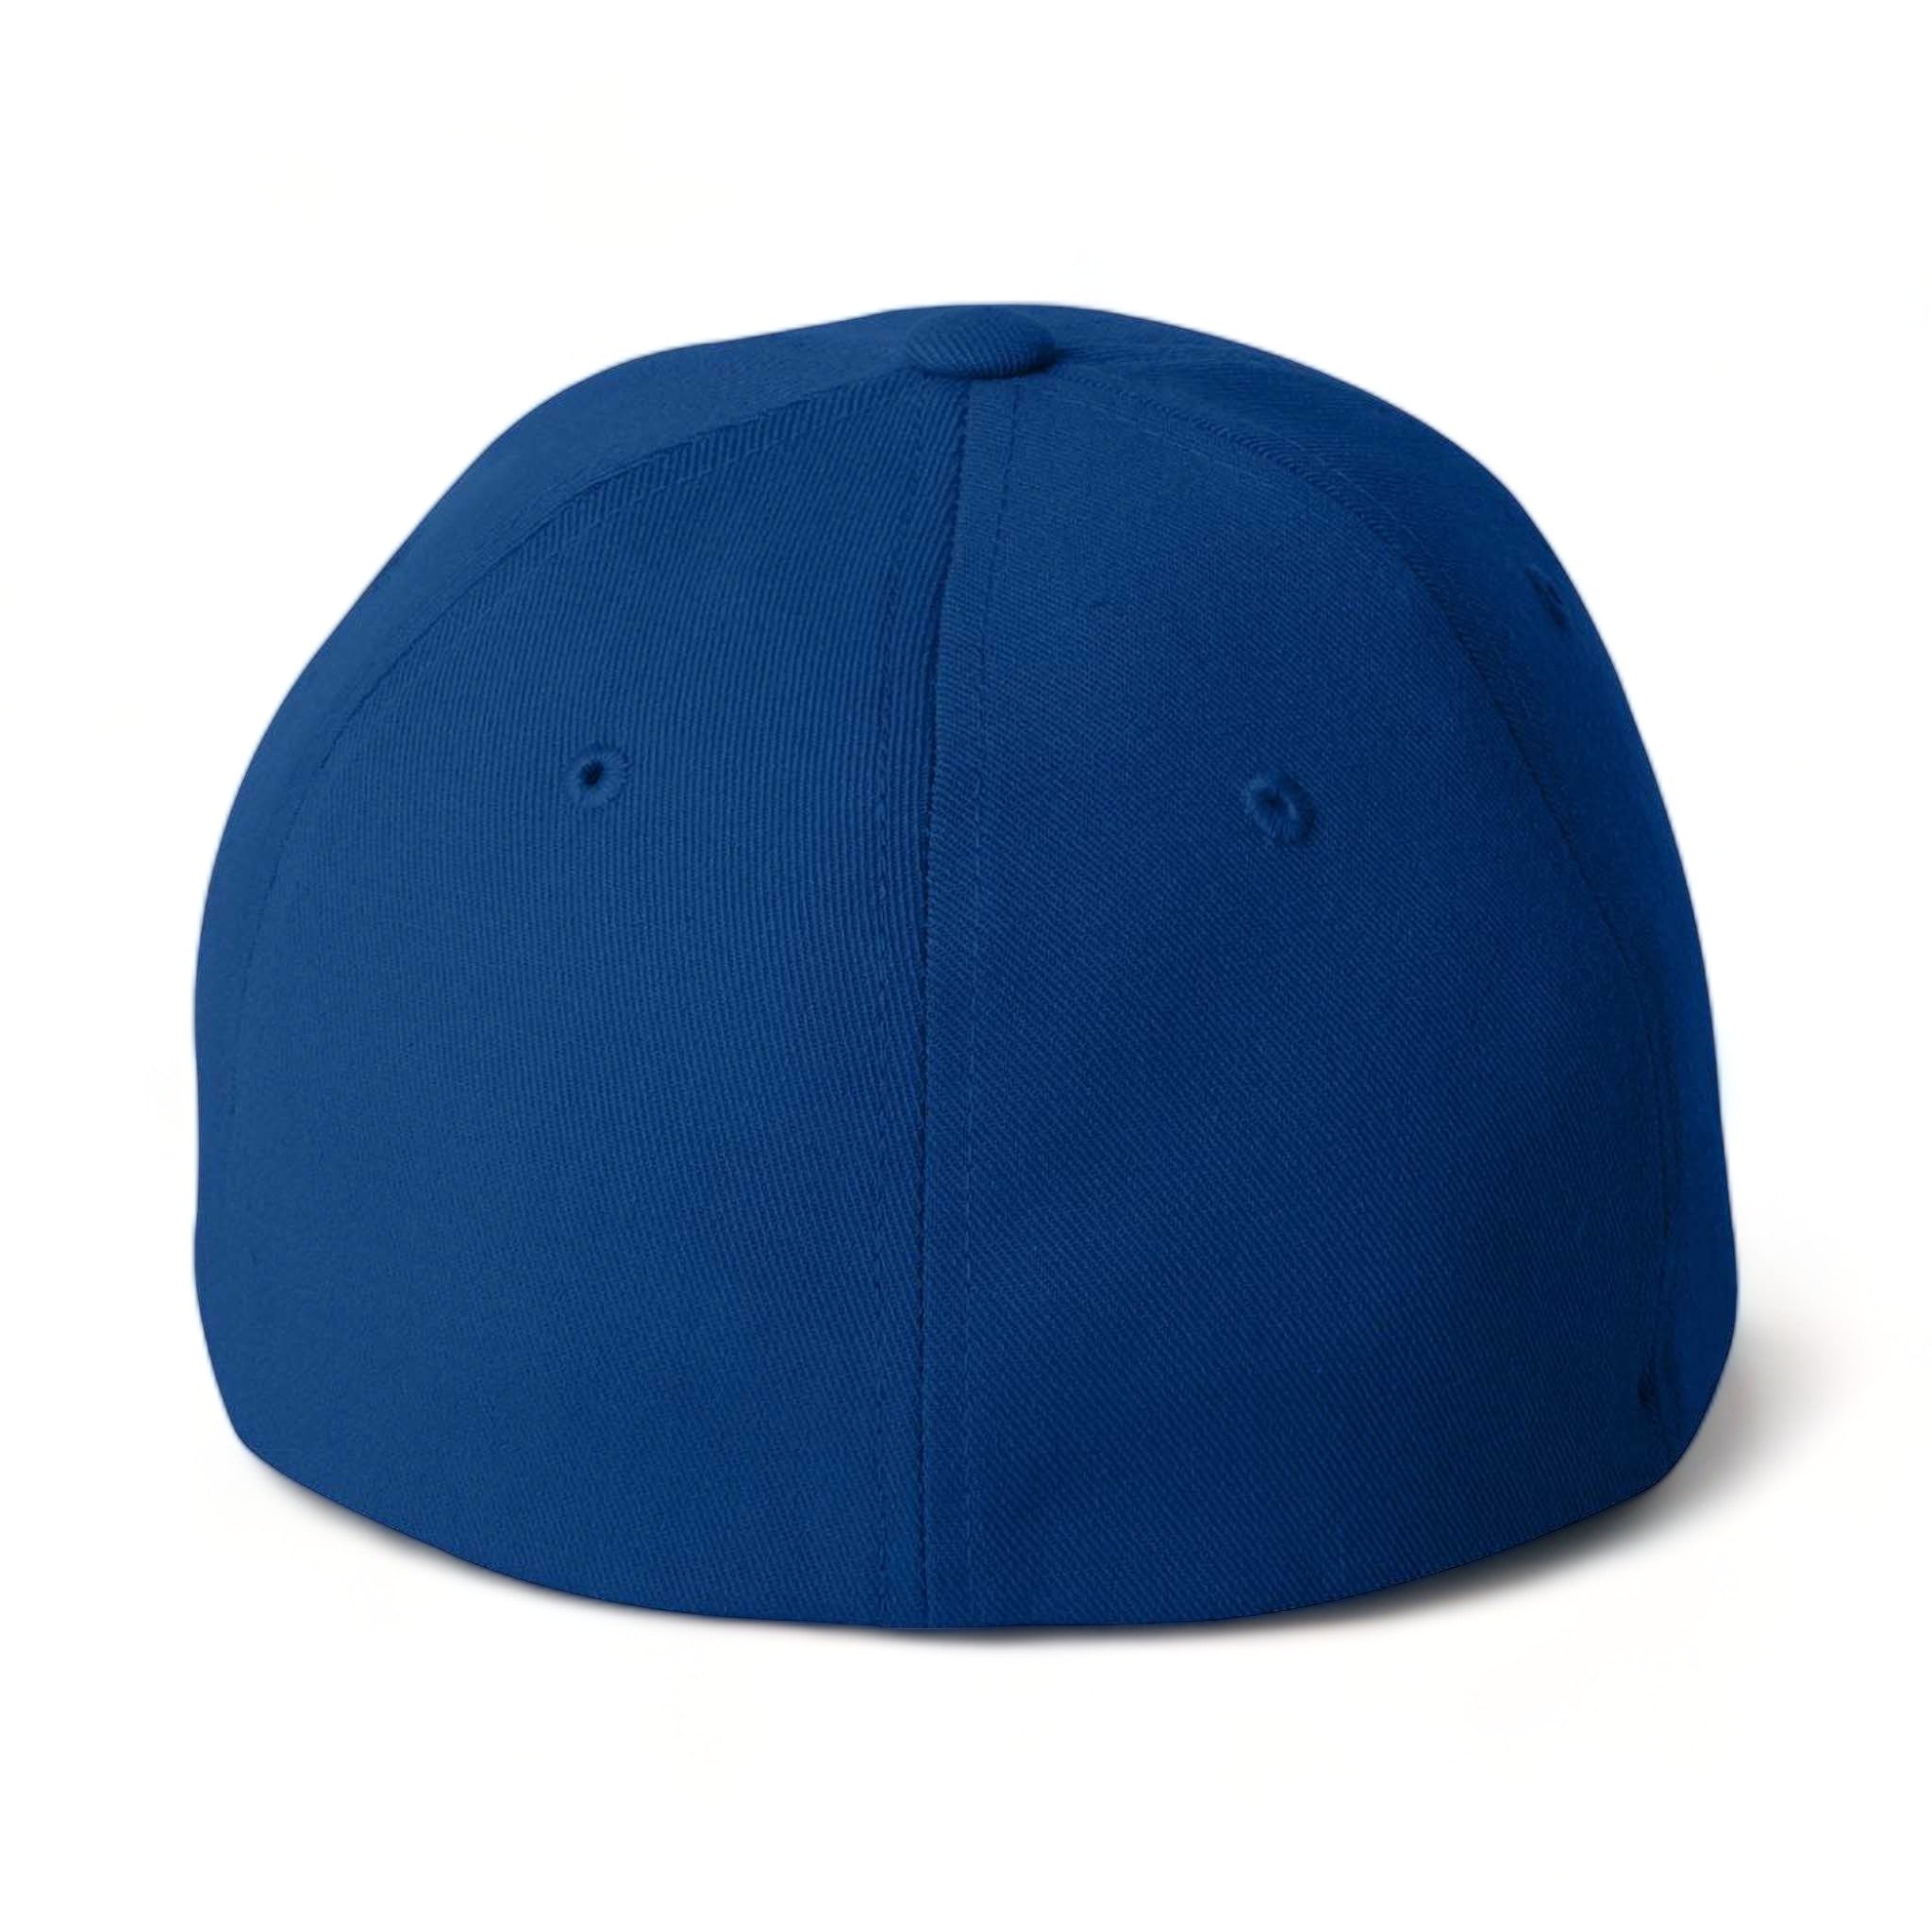 Back view of Flexfit 6580 custom hat in royal blue